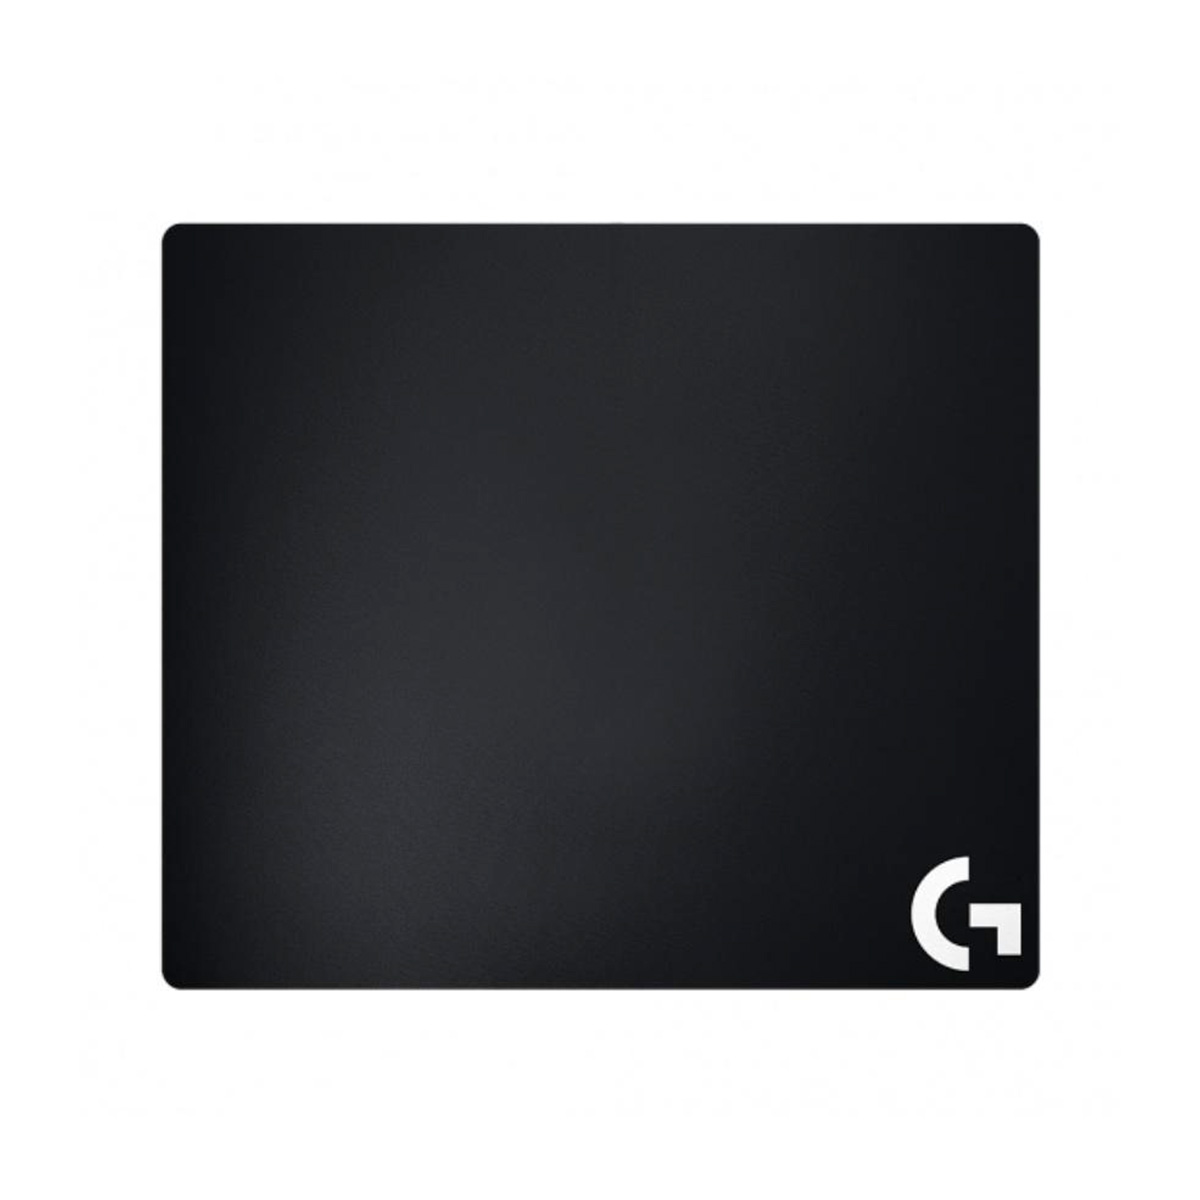 Mousepad Gamer Logitech G640 Hard - Grande 400 x 460mm - 943-000088